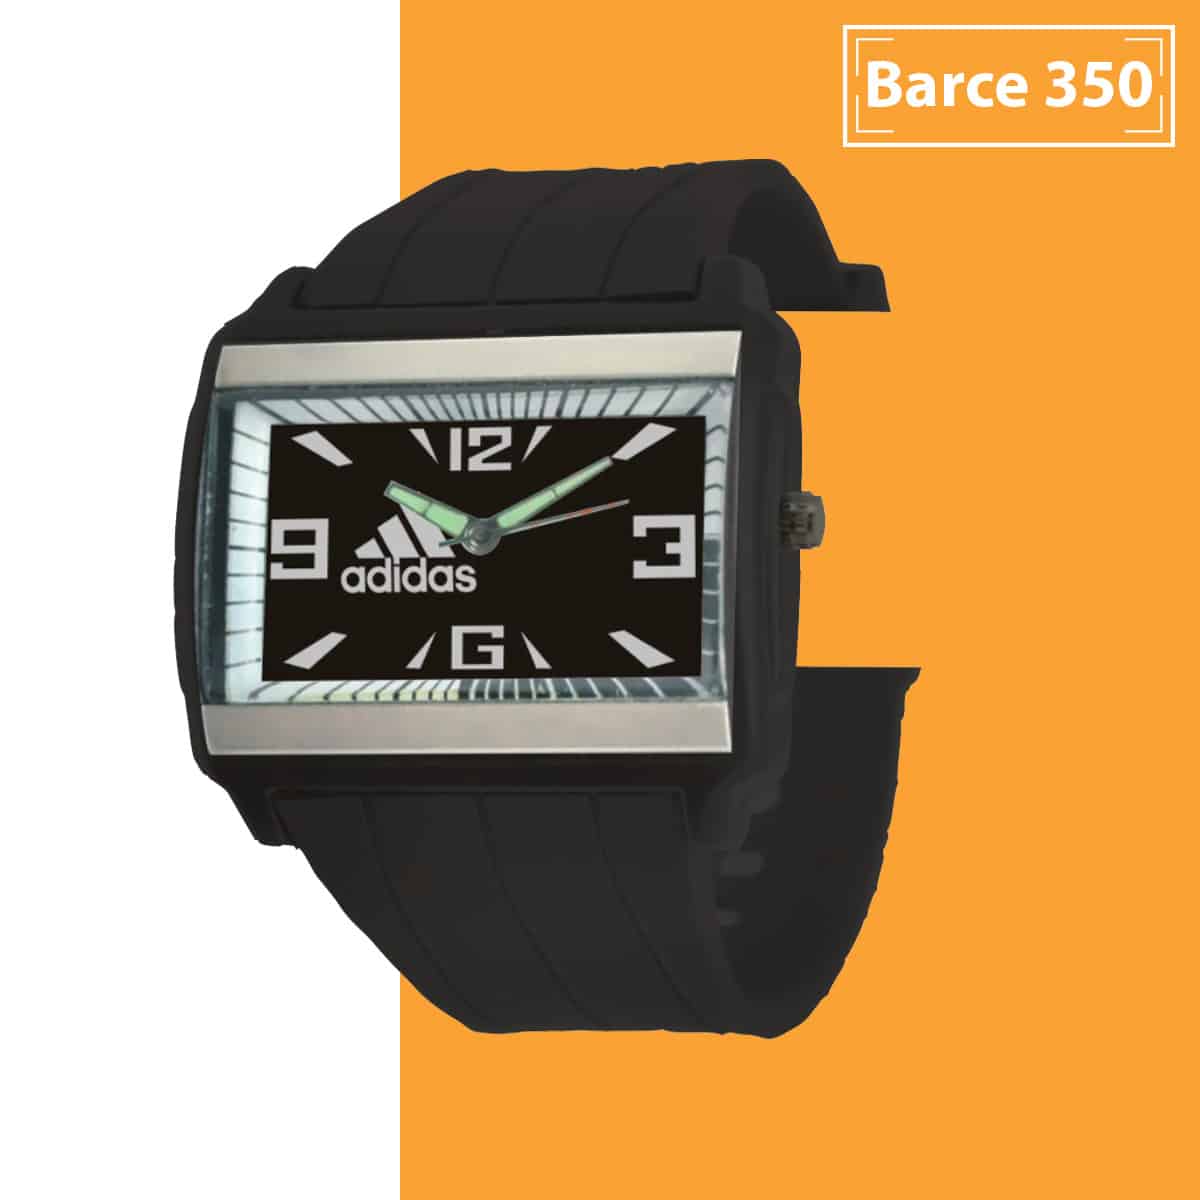 Barce350-C-1